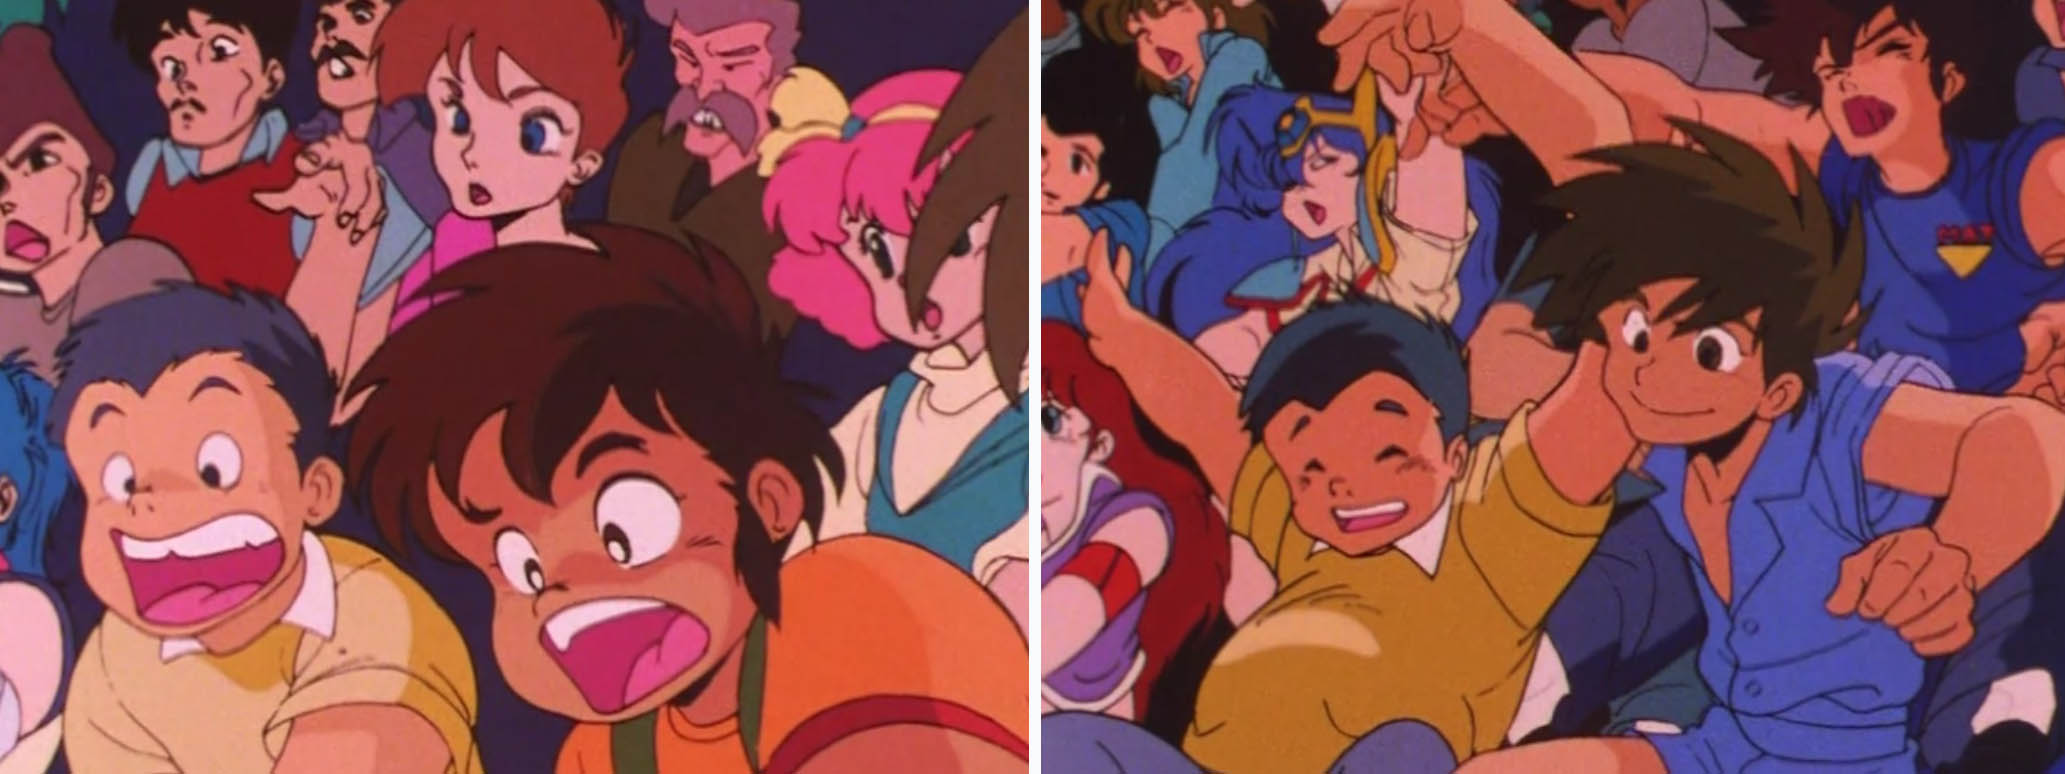 Classic '80s anime Saint Seiya will be remade for Netflix - Polygon